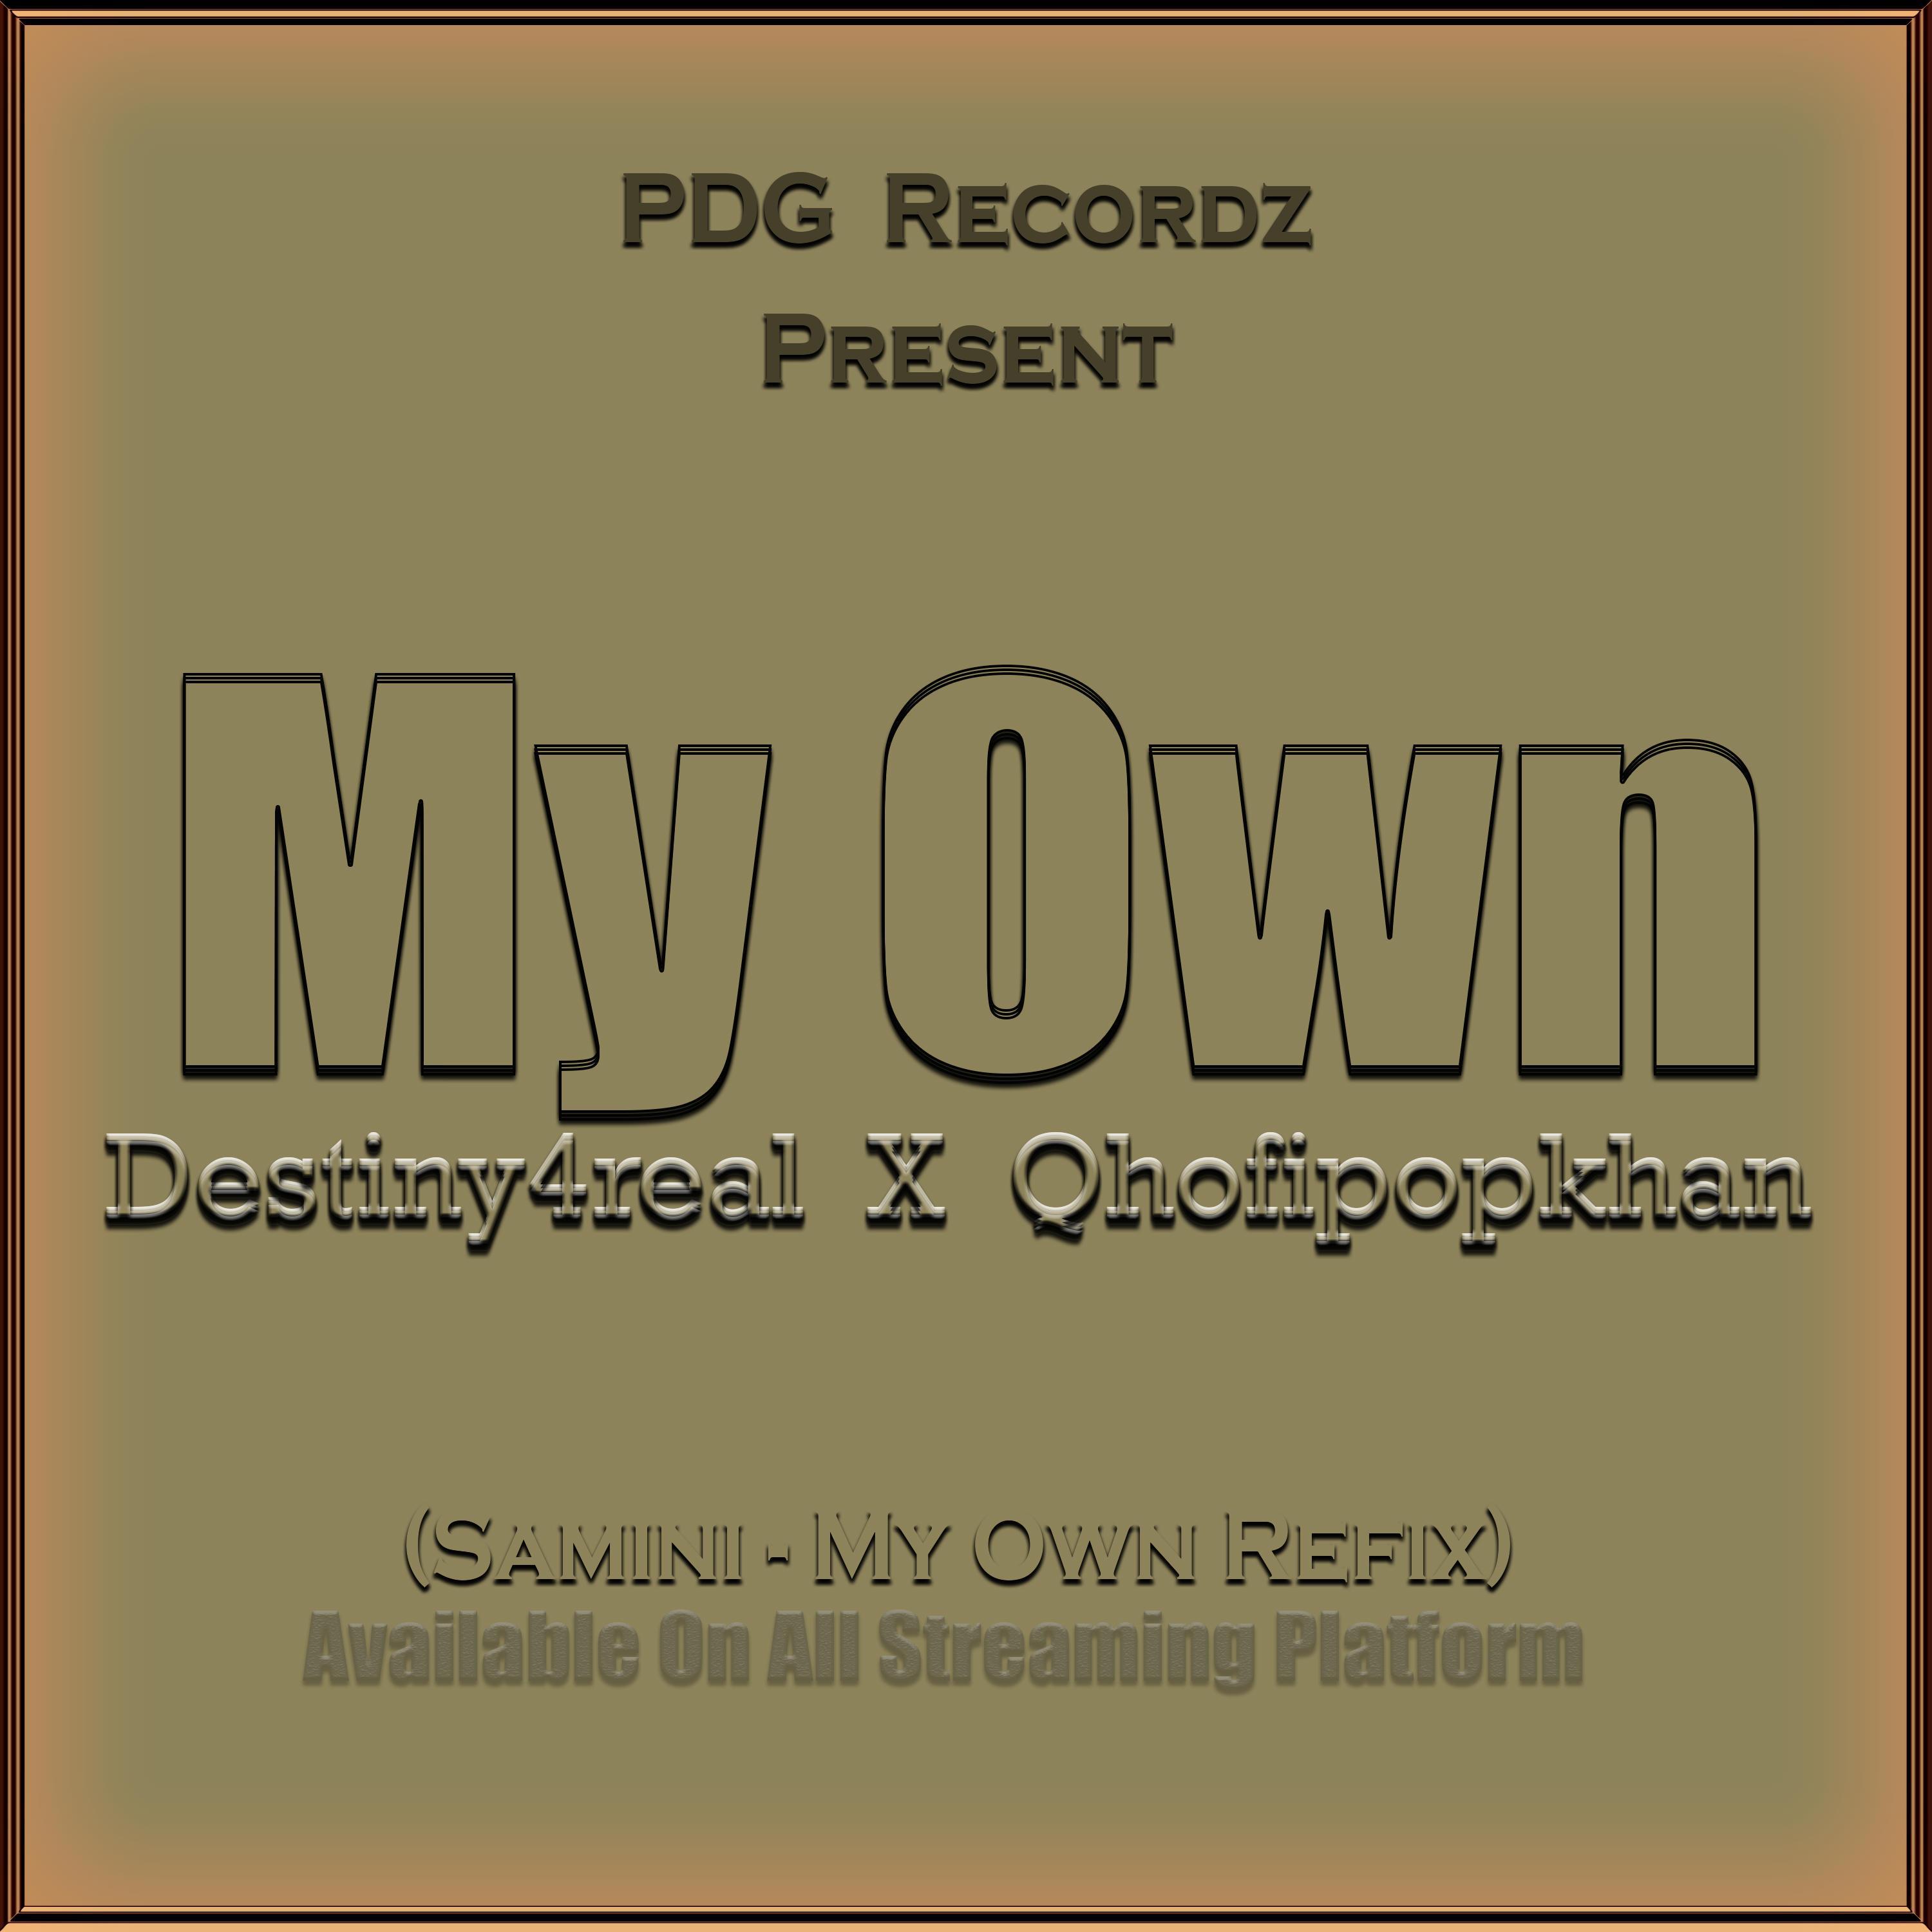 Destiny4real - My Own (feat. Qhofipopkhan) (Samini Remix)